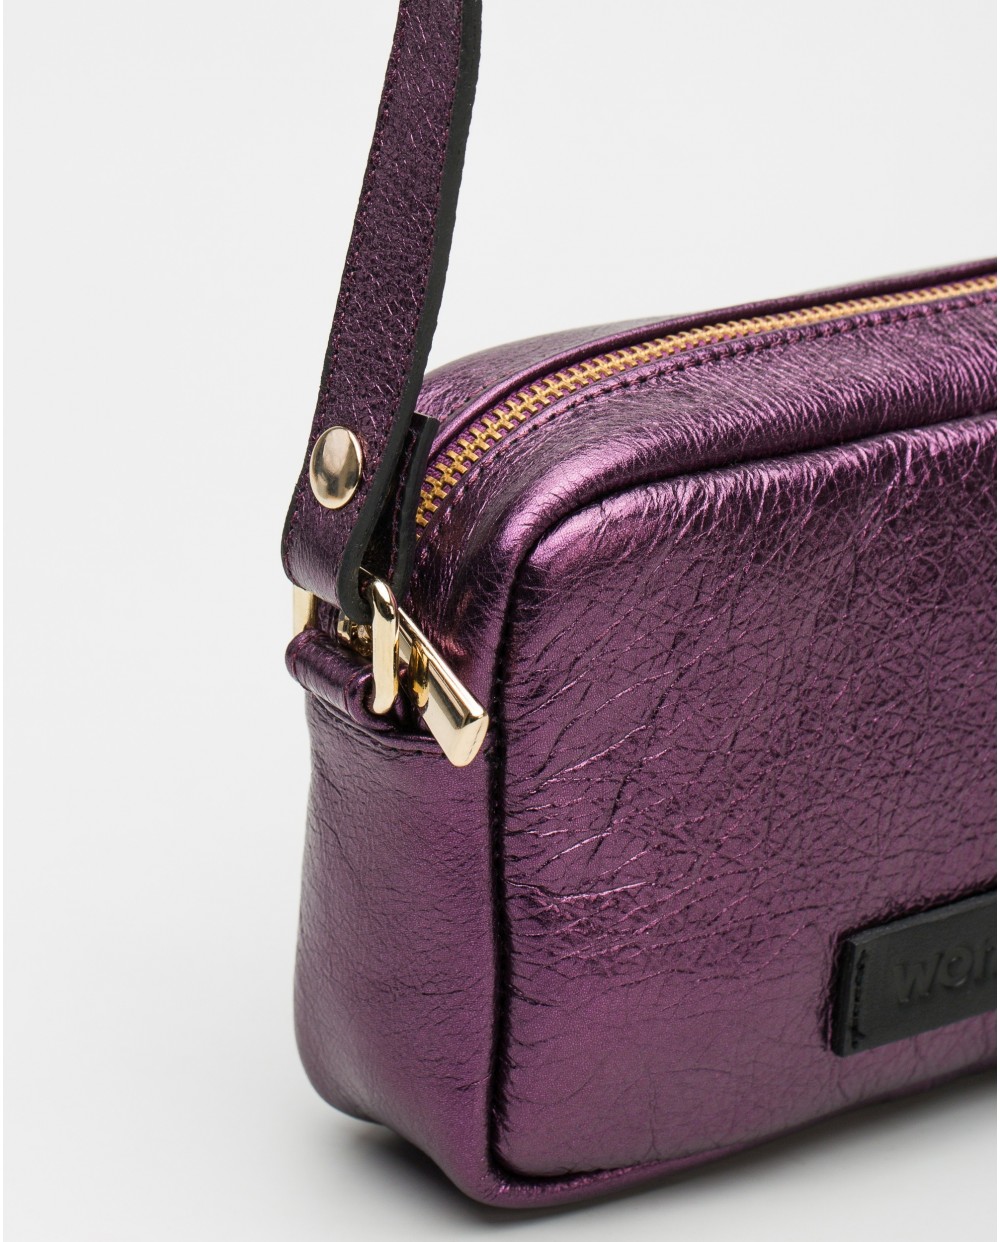 Wonders-Winter Outlet-Violet metallic leather Bum bag